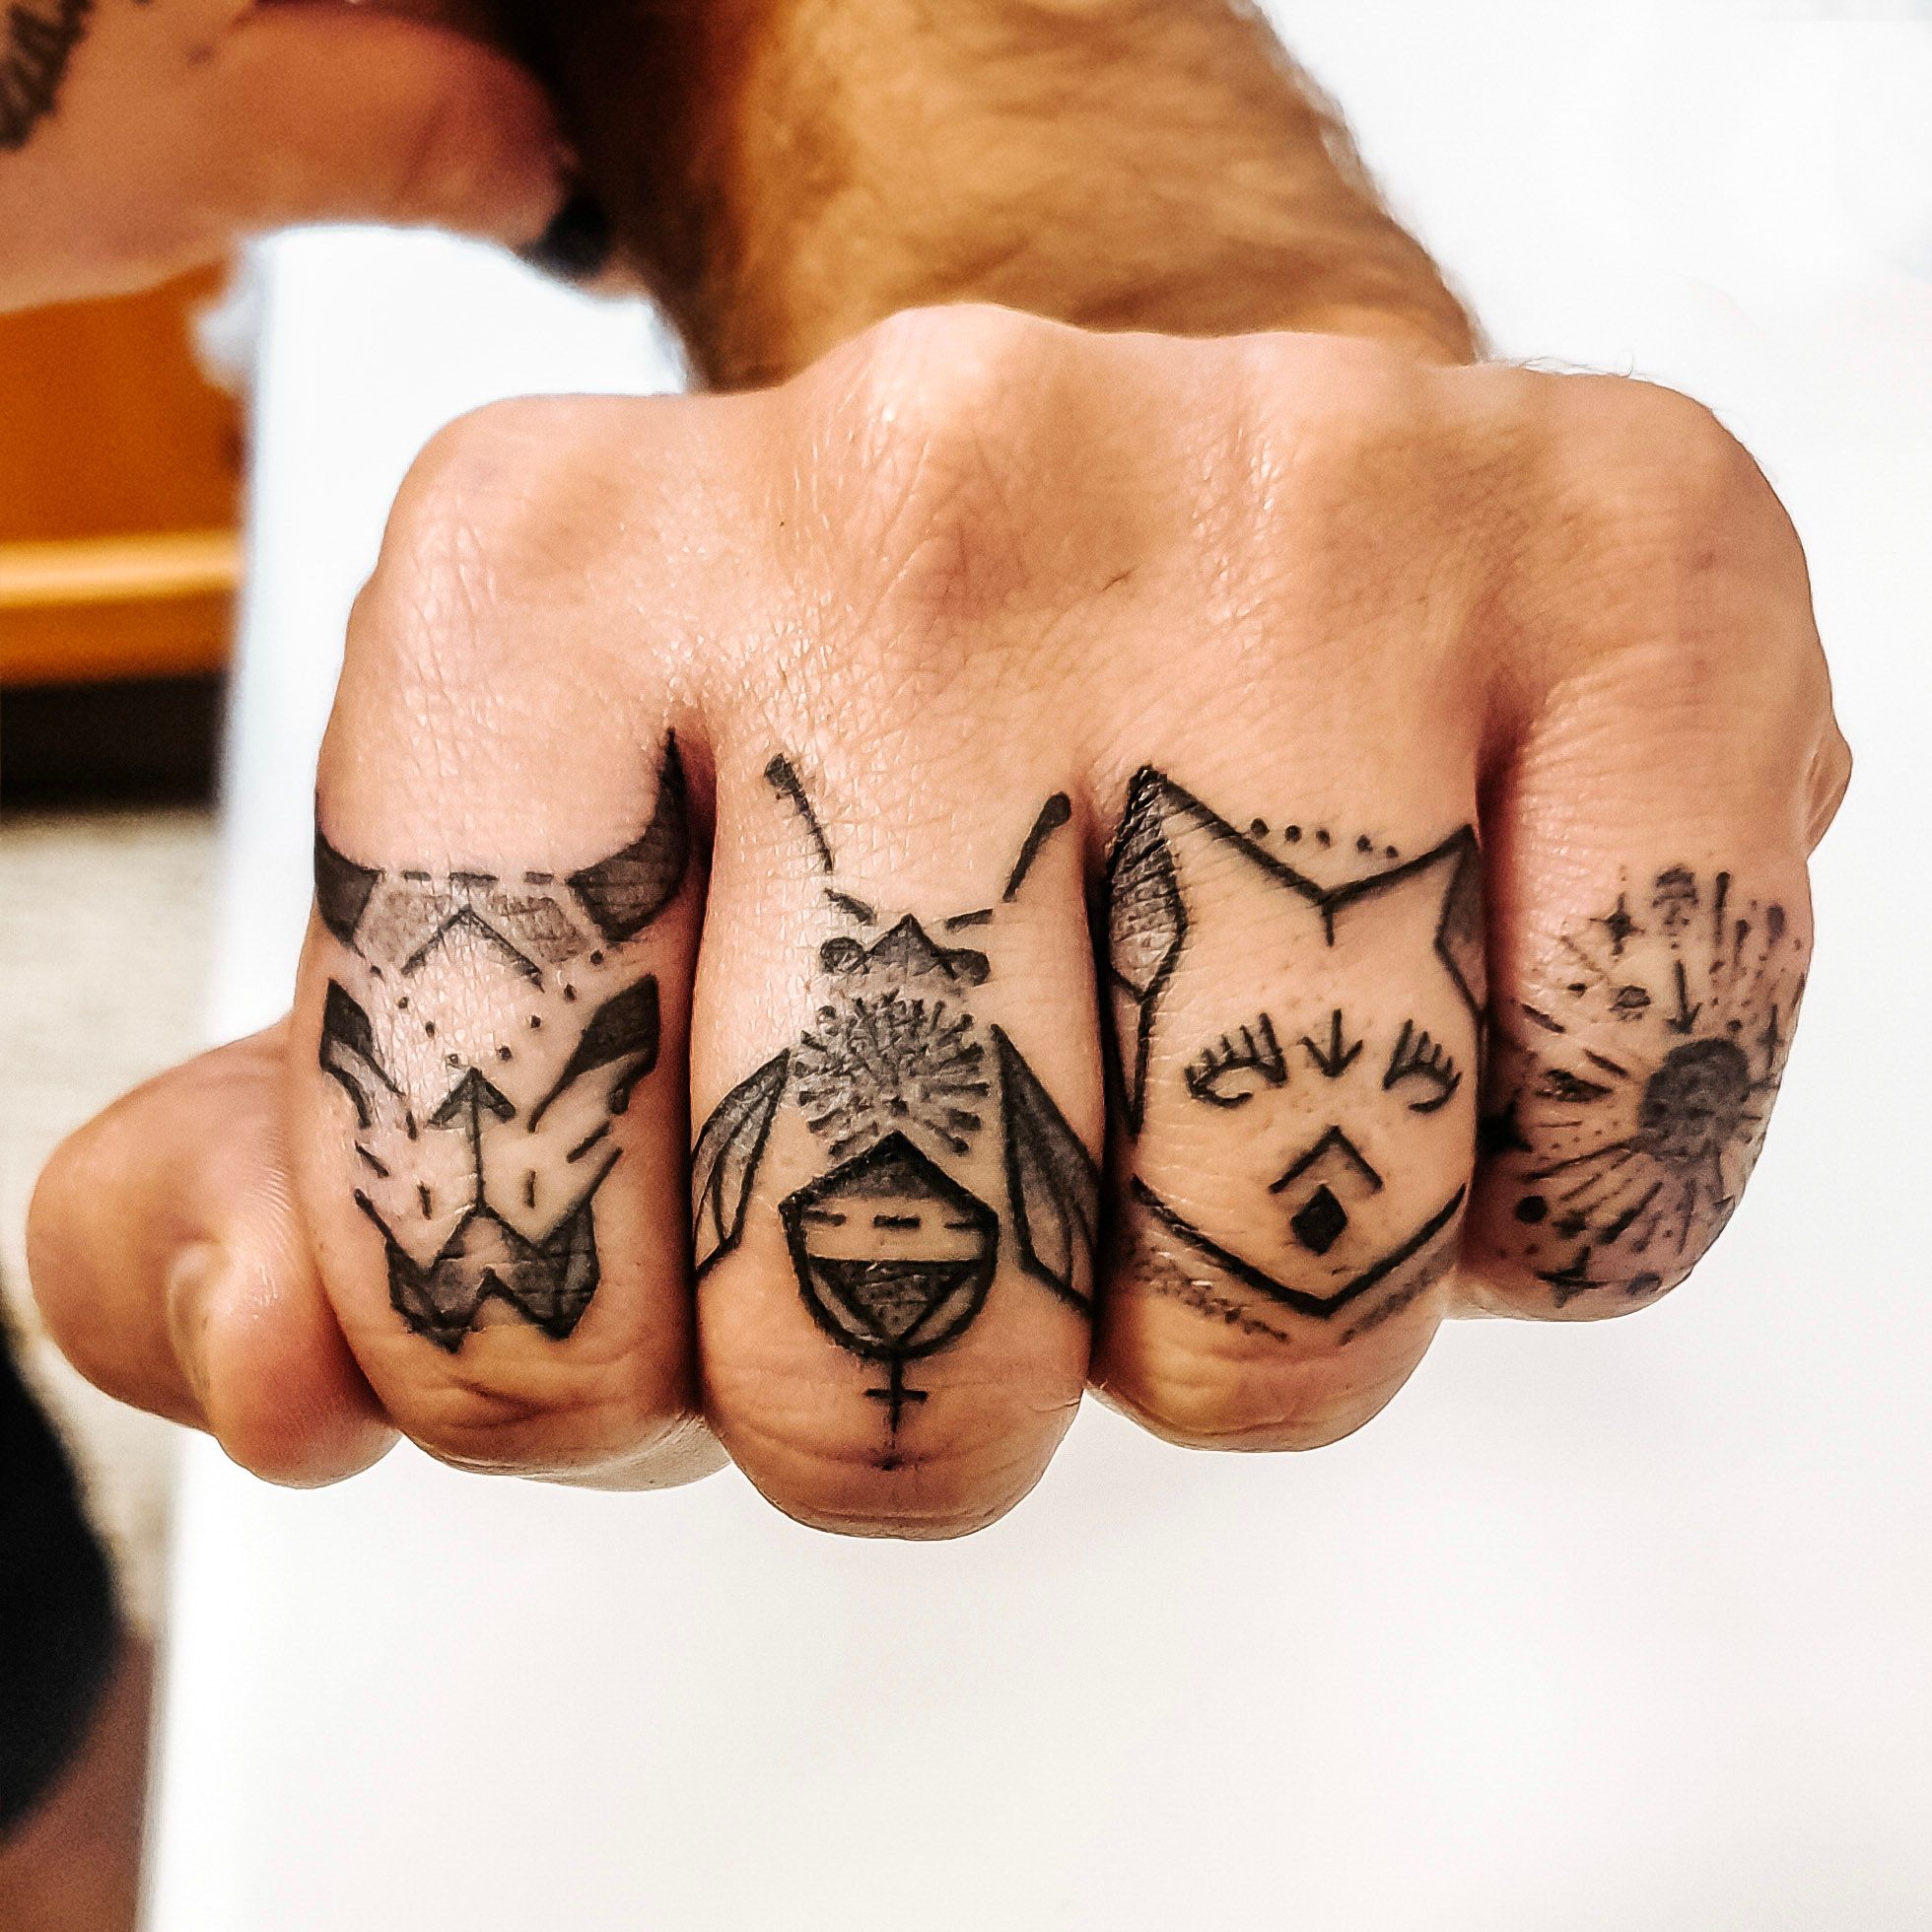 Armenian Tattoos And Meanings | Finger tattoos, Tattoo designs, Hand tattoos